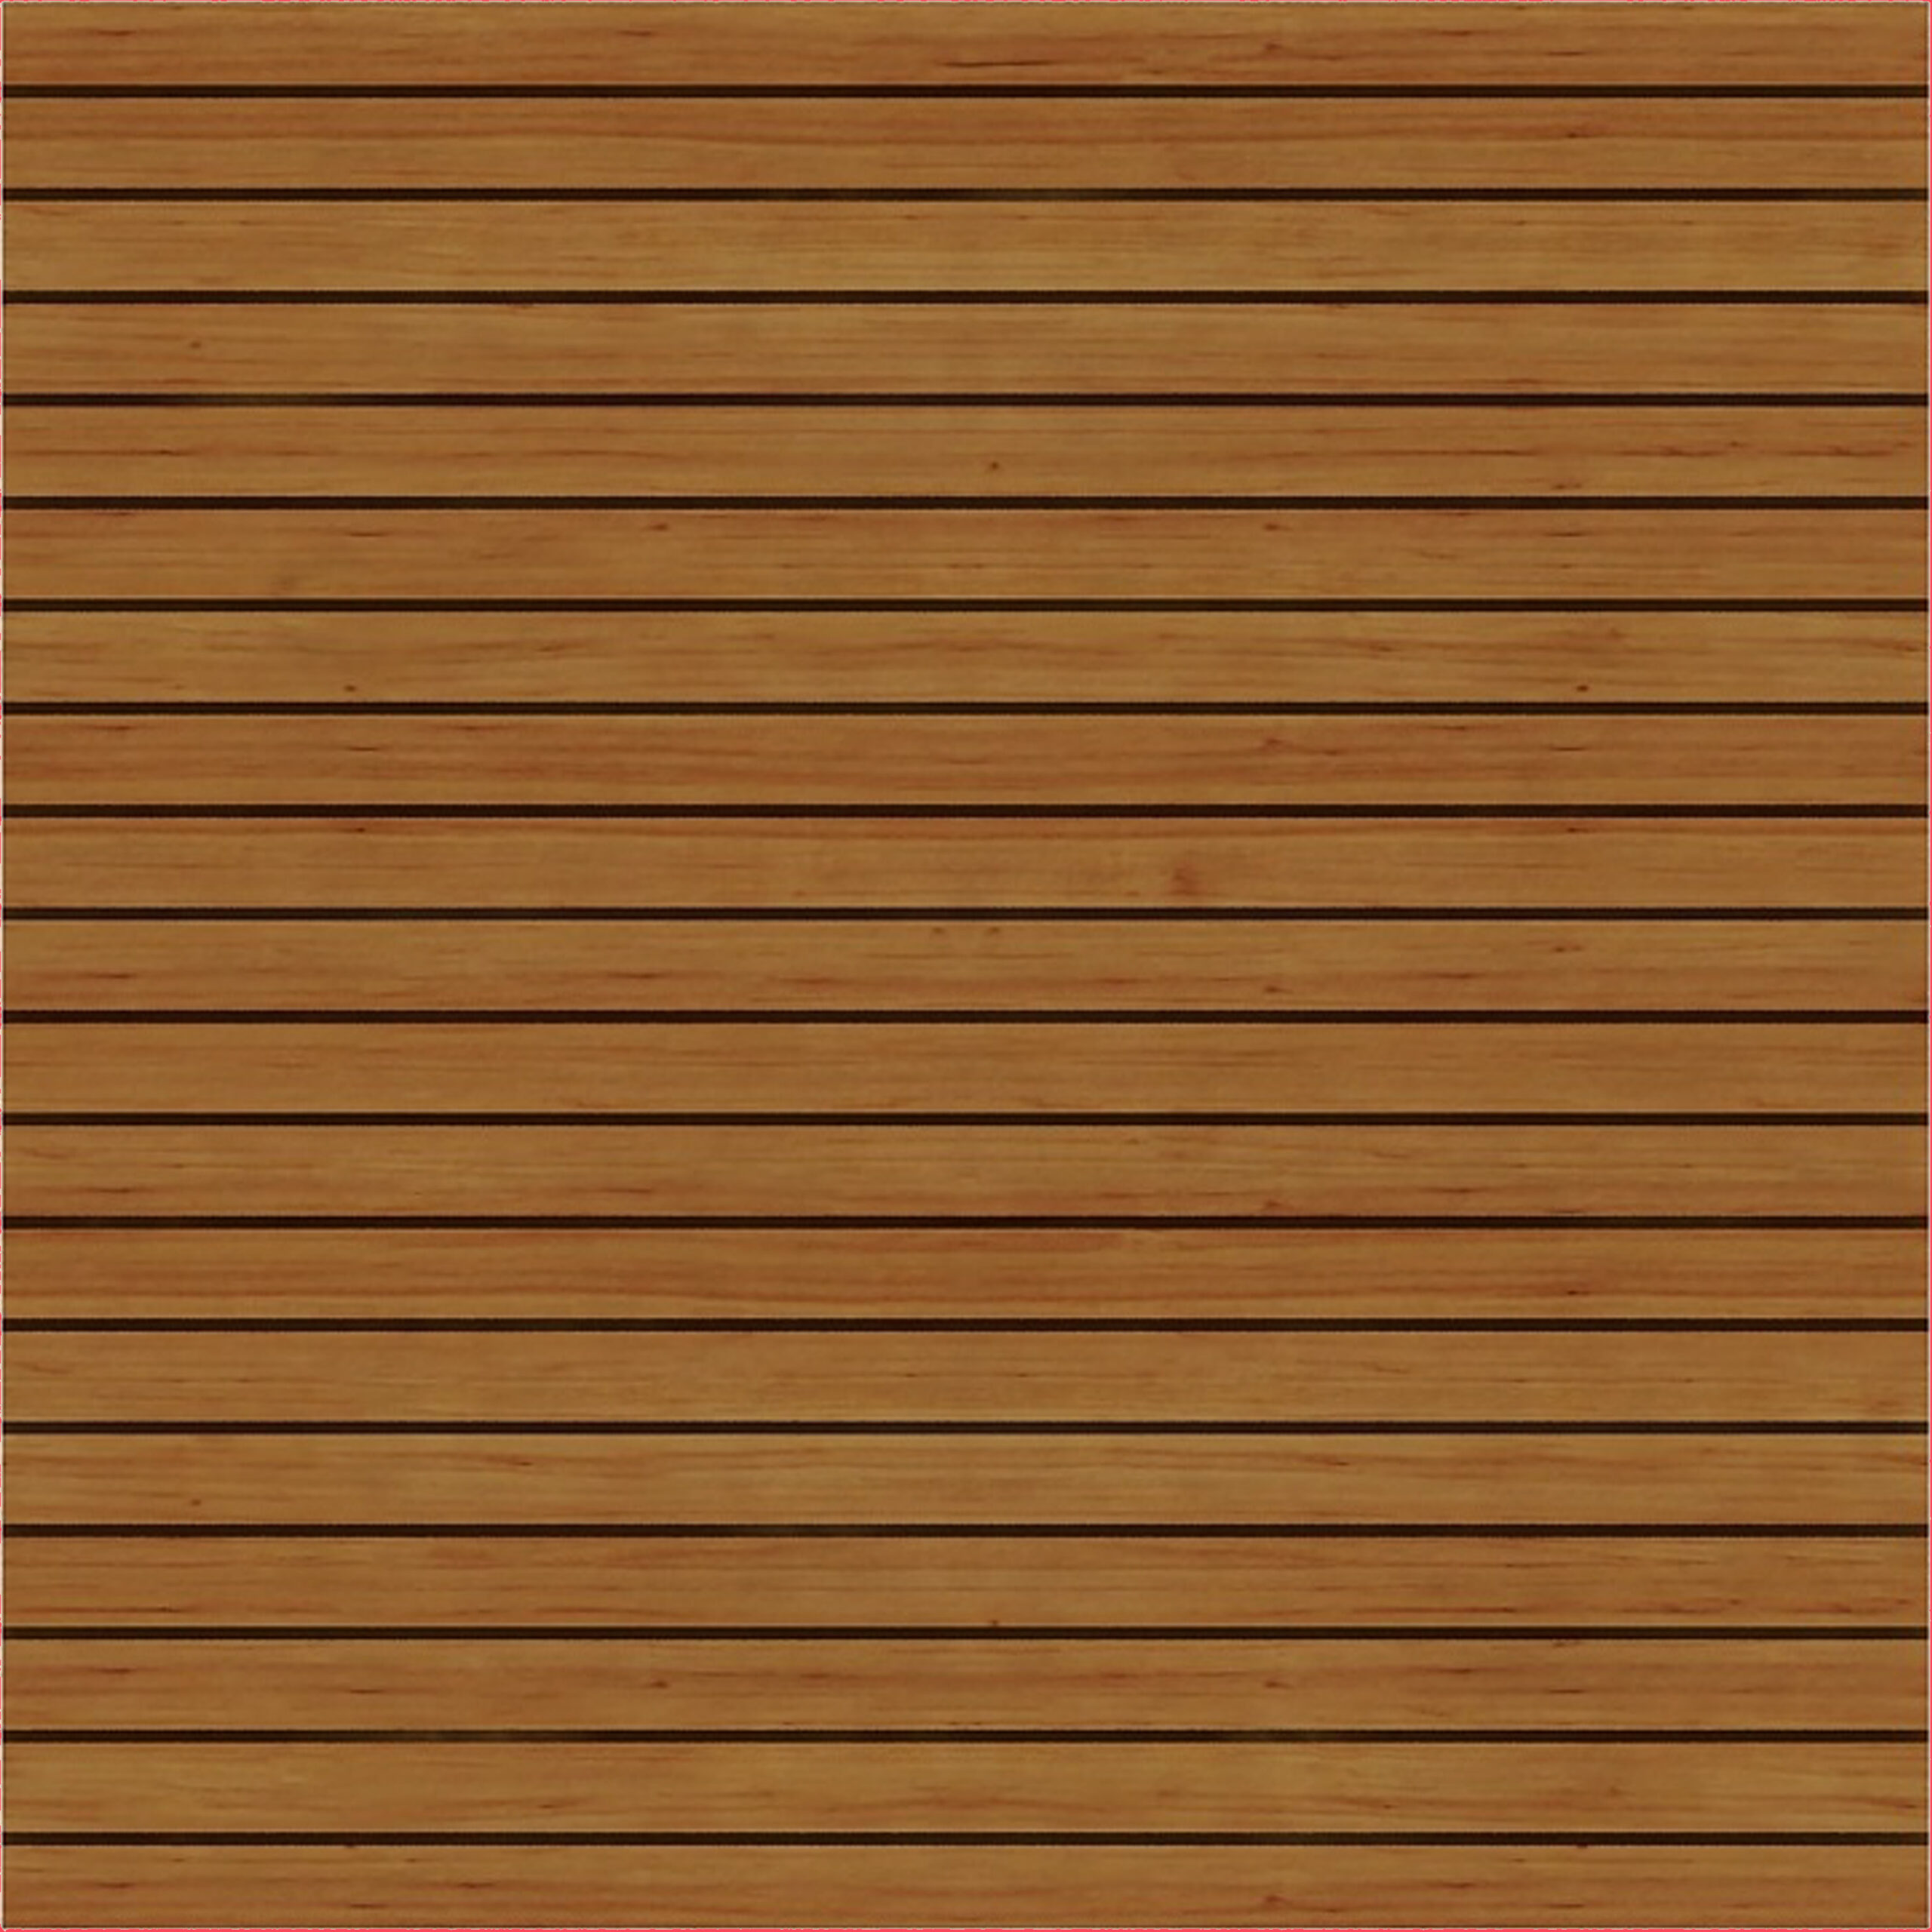 ESK111 Reflective Wooden Panel